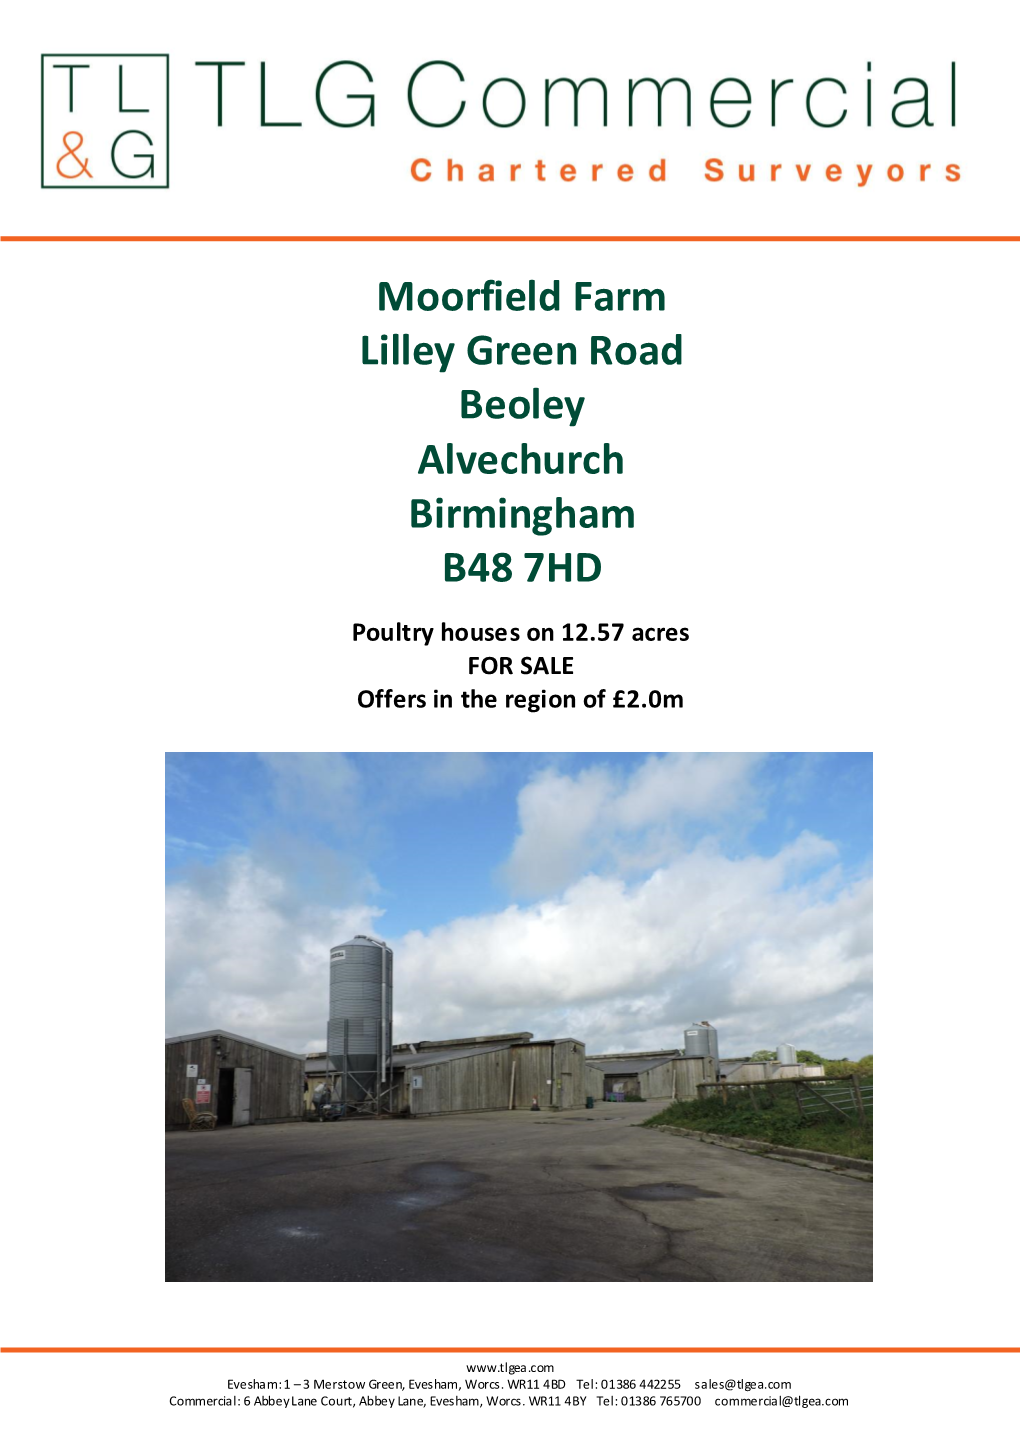 Moorfield Farm Lilley Green Road Beoley Alvechurch Birmingham B48 7HD